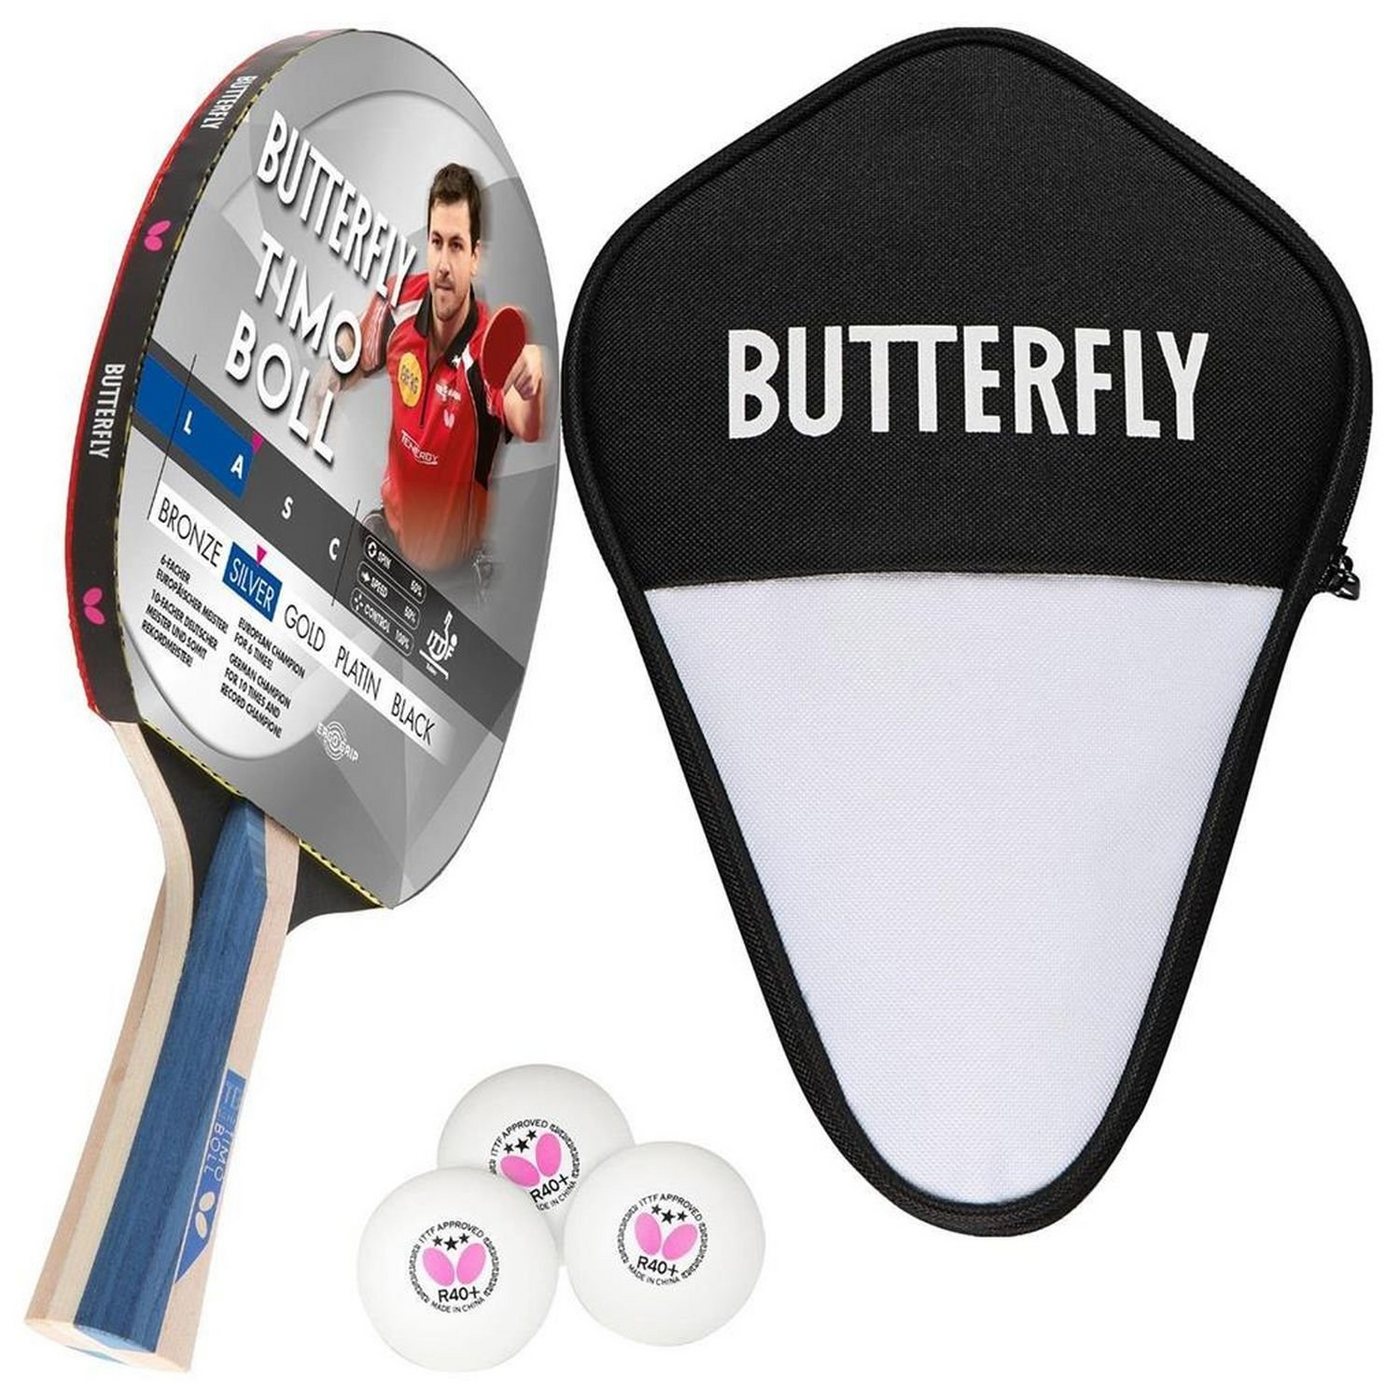 Butterfly Tischtennisschläger 1x Timo Boll Silber 85016 + Cell Case 1 + Bälle, Tischtennis Schläger Set Tischtennisset Table Tennis Bat Racket von Butterfly